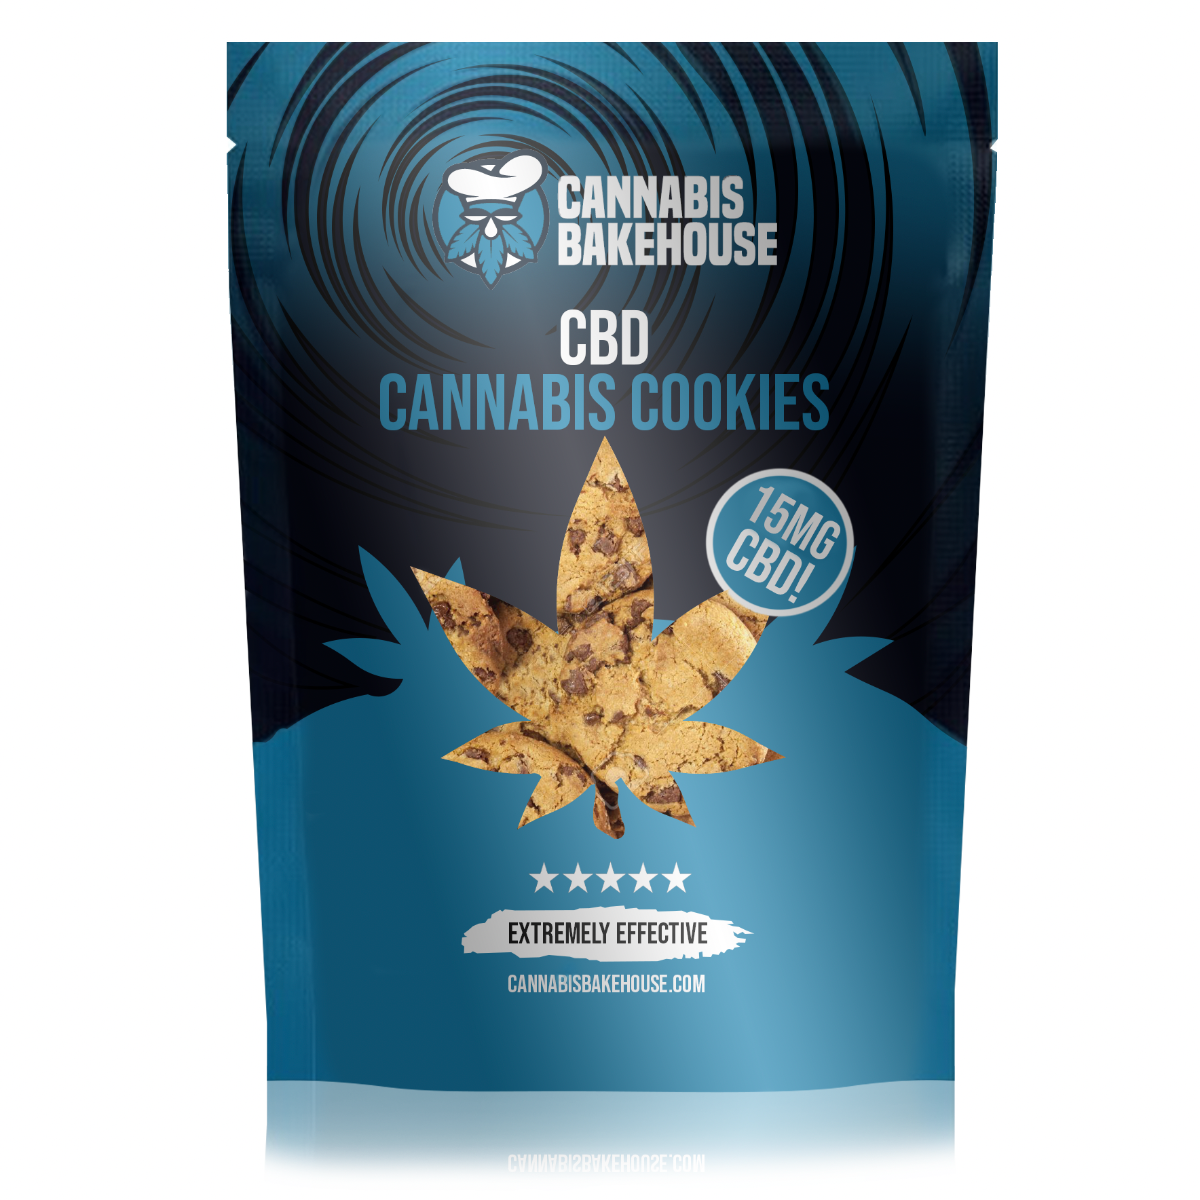 Cannabis bakehouse CBD Cookies